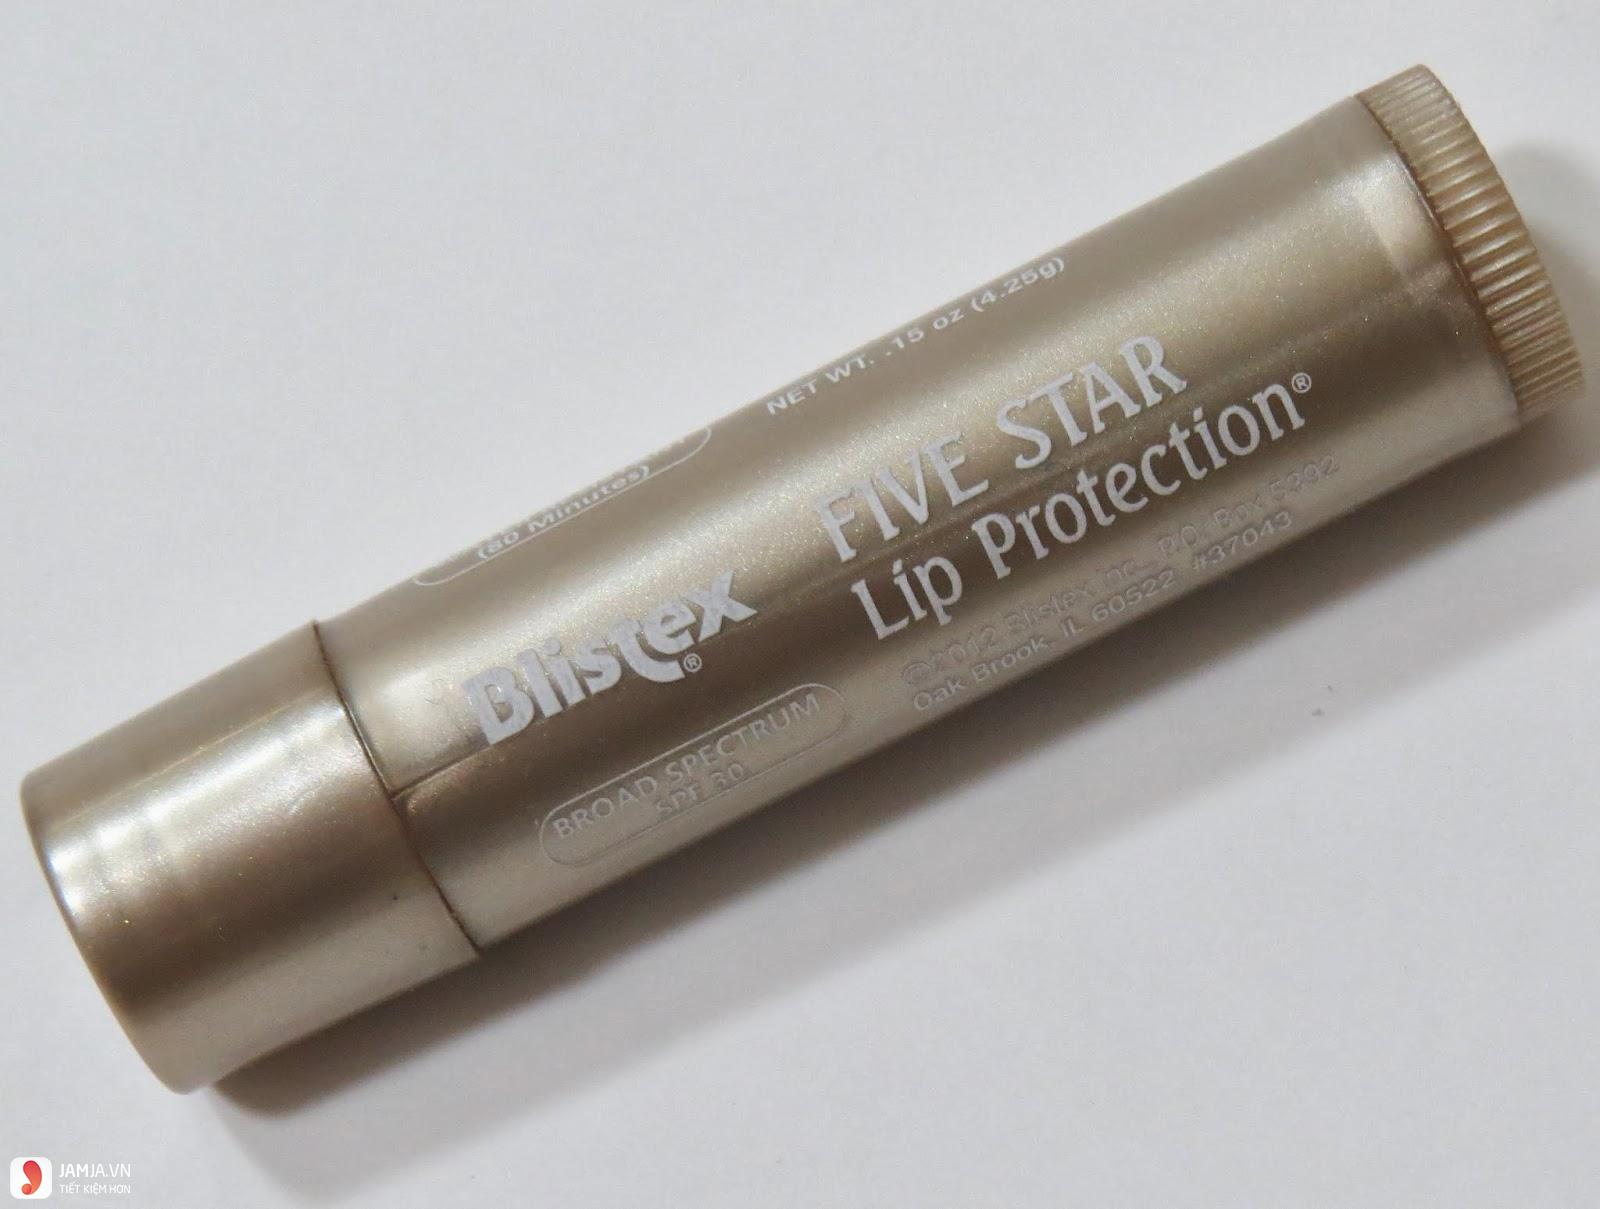 Blistex Five Star Lip Protection 2